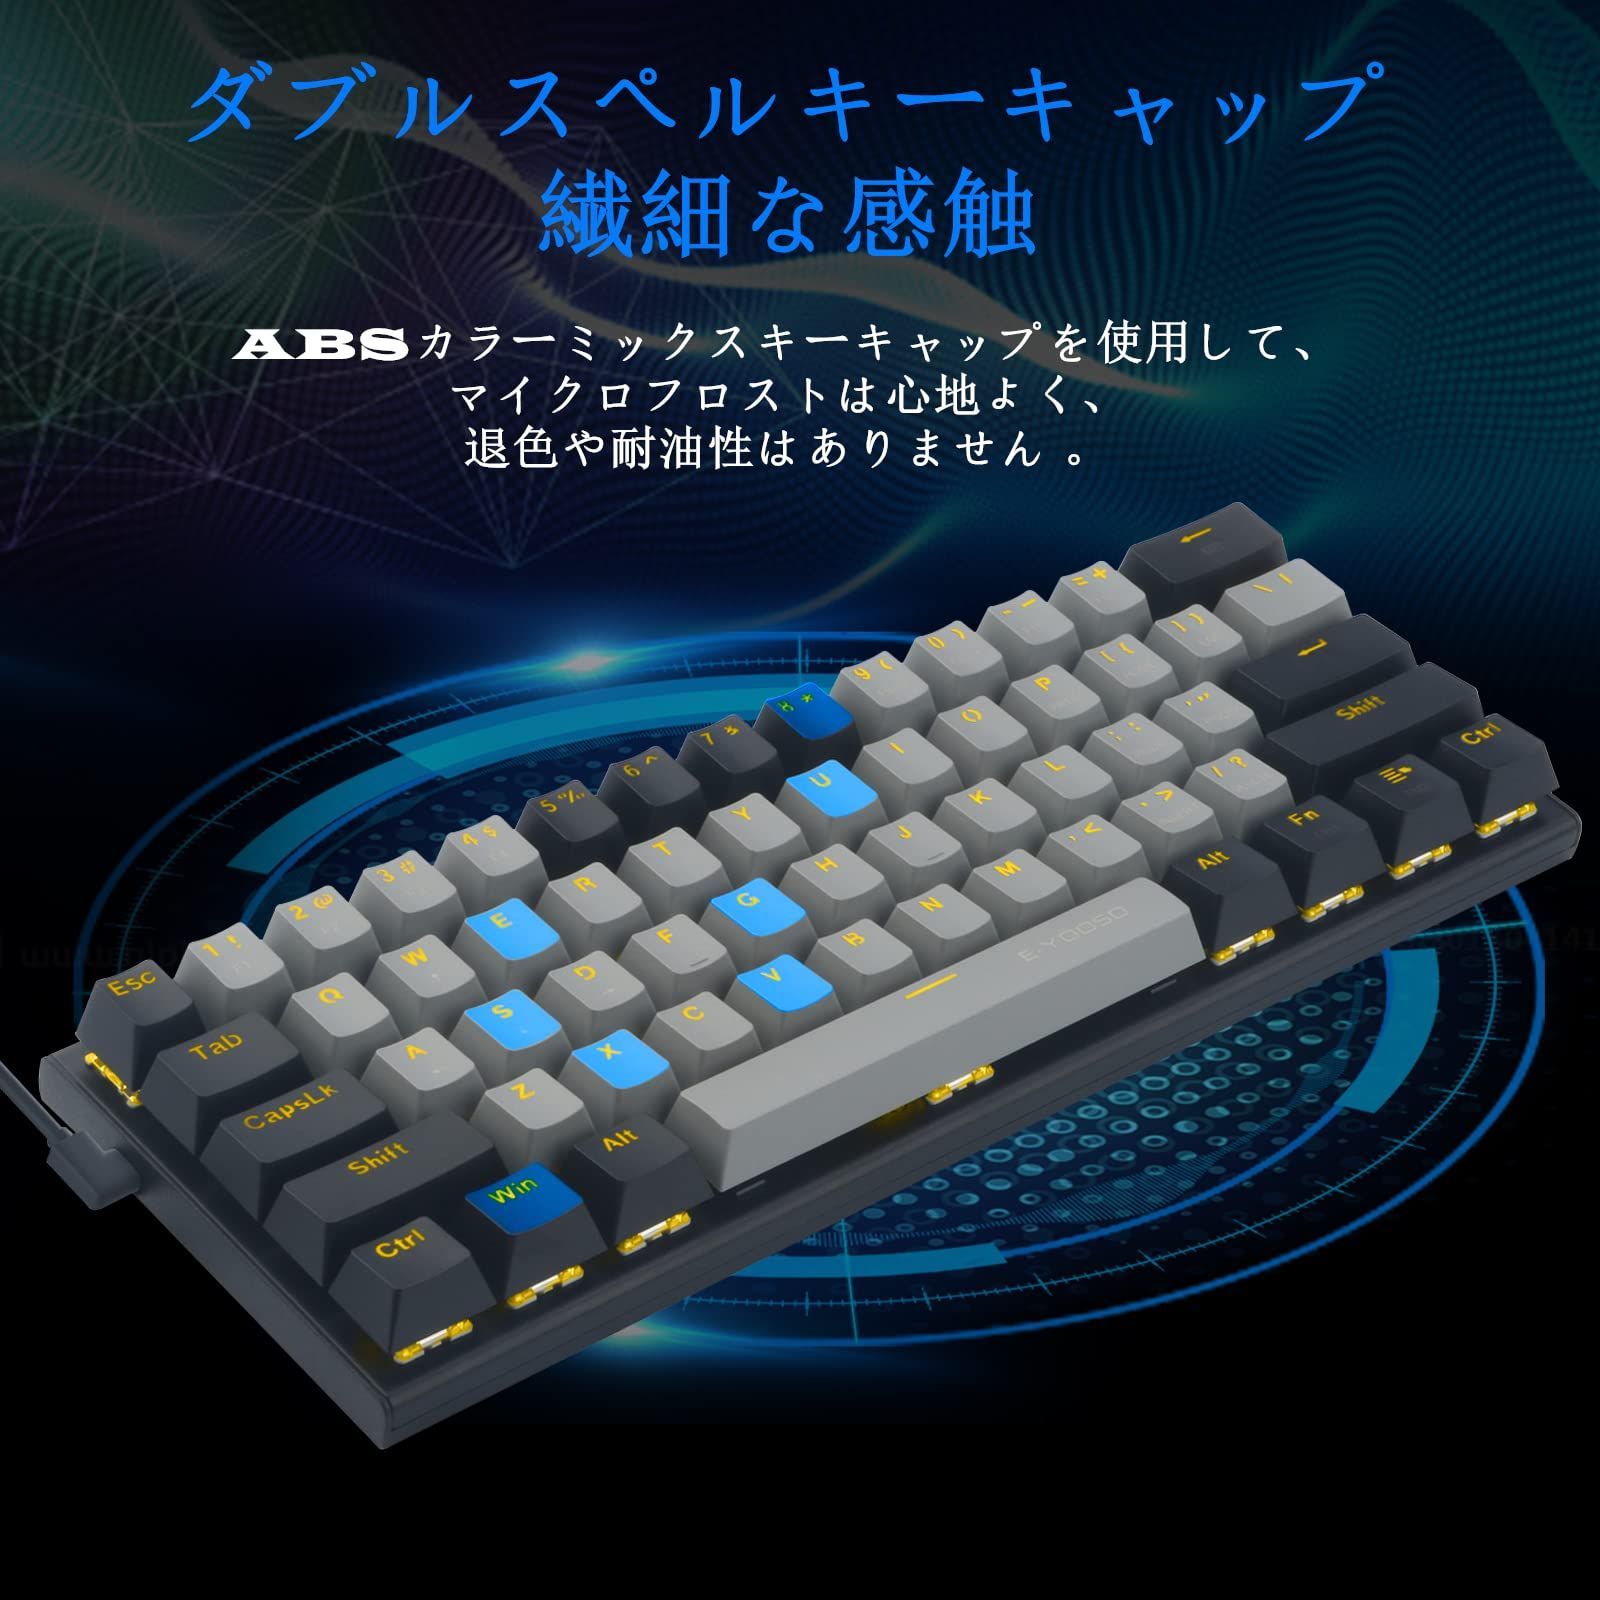 e元素メカニカルキーボード61キー 青軸を採用のゲーミングキーボード 黄色のLEDバックライト付き 60％小型コンパクトキーボード USB有